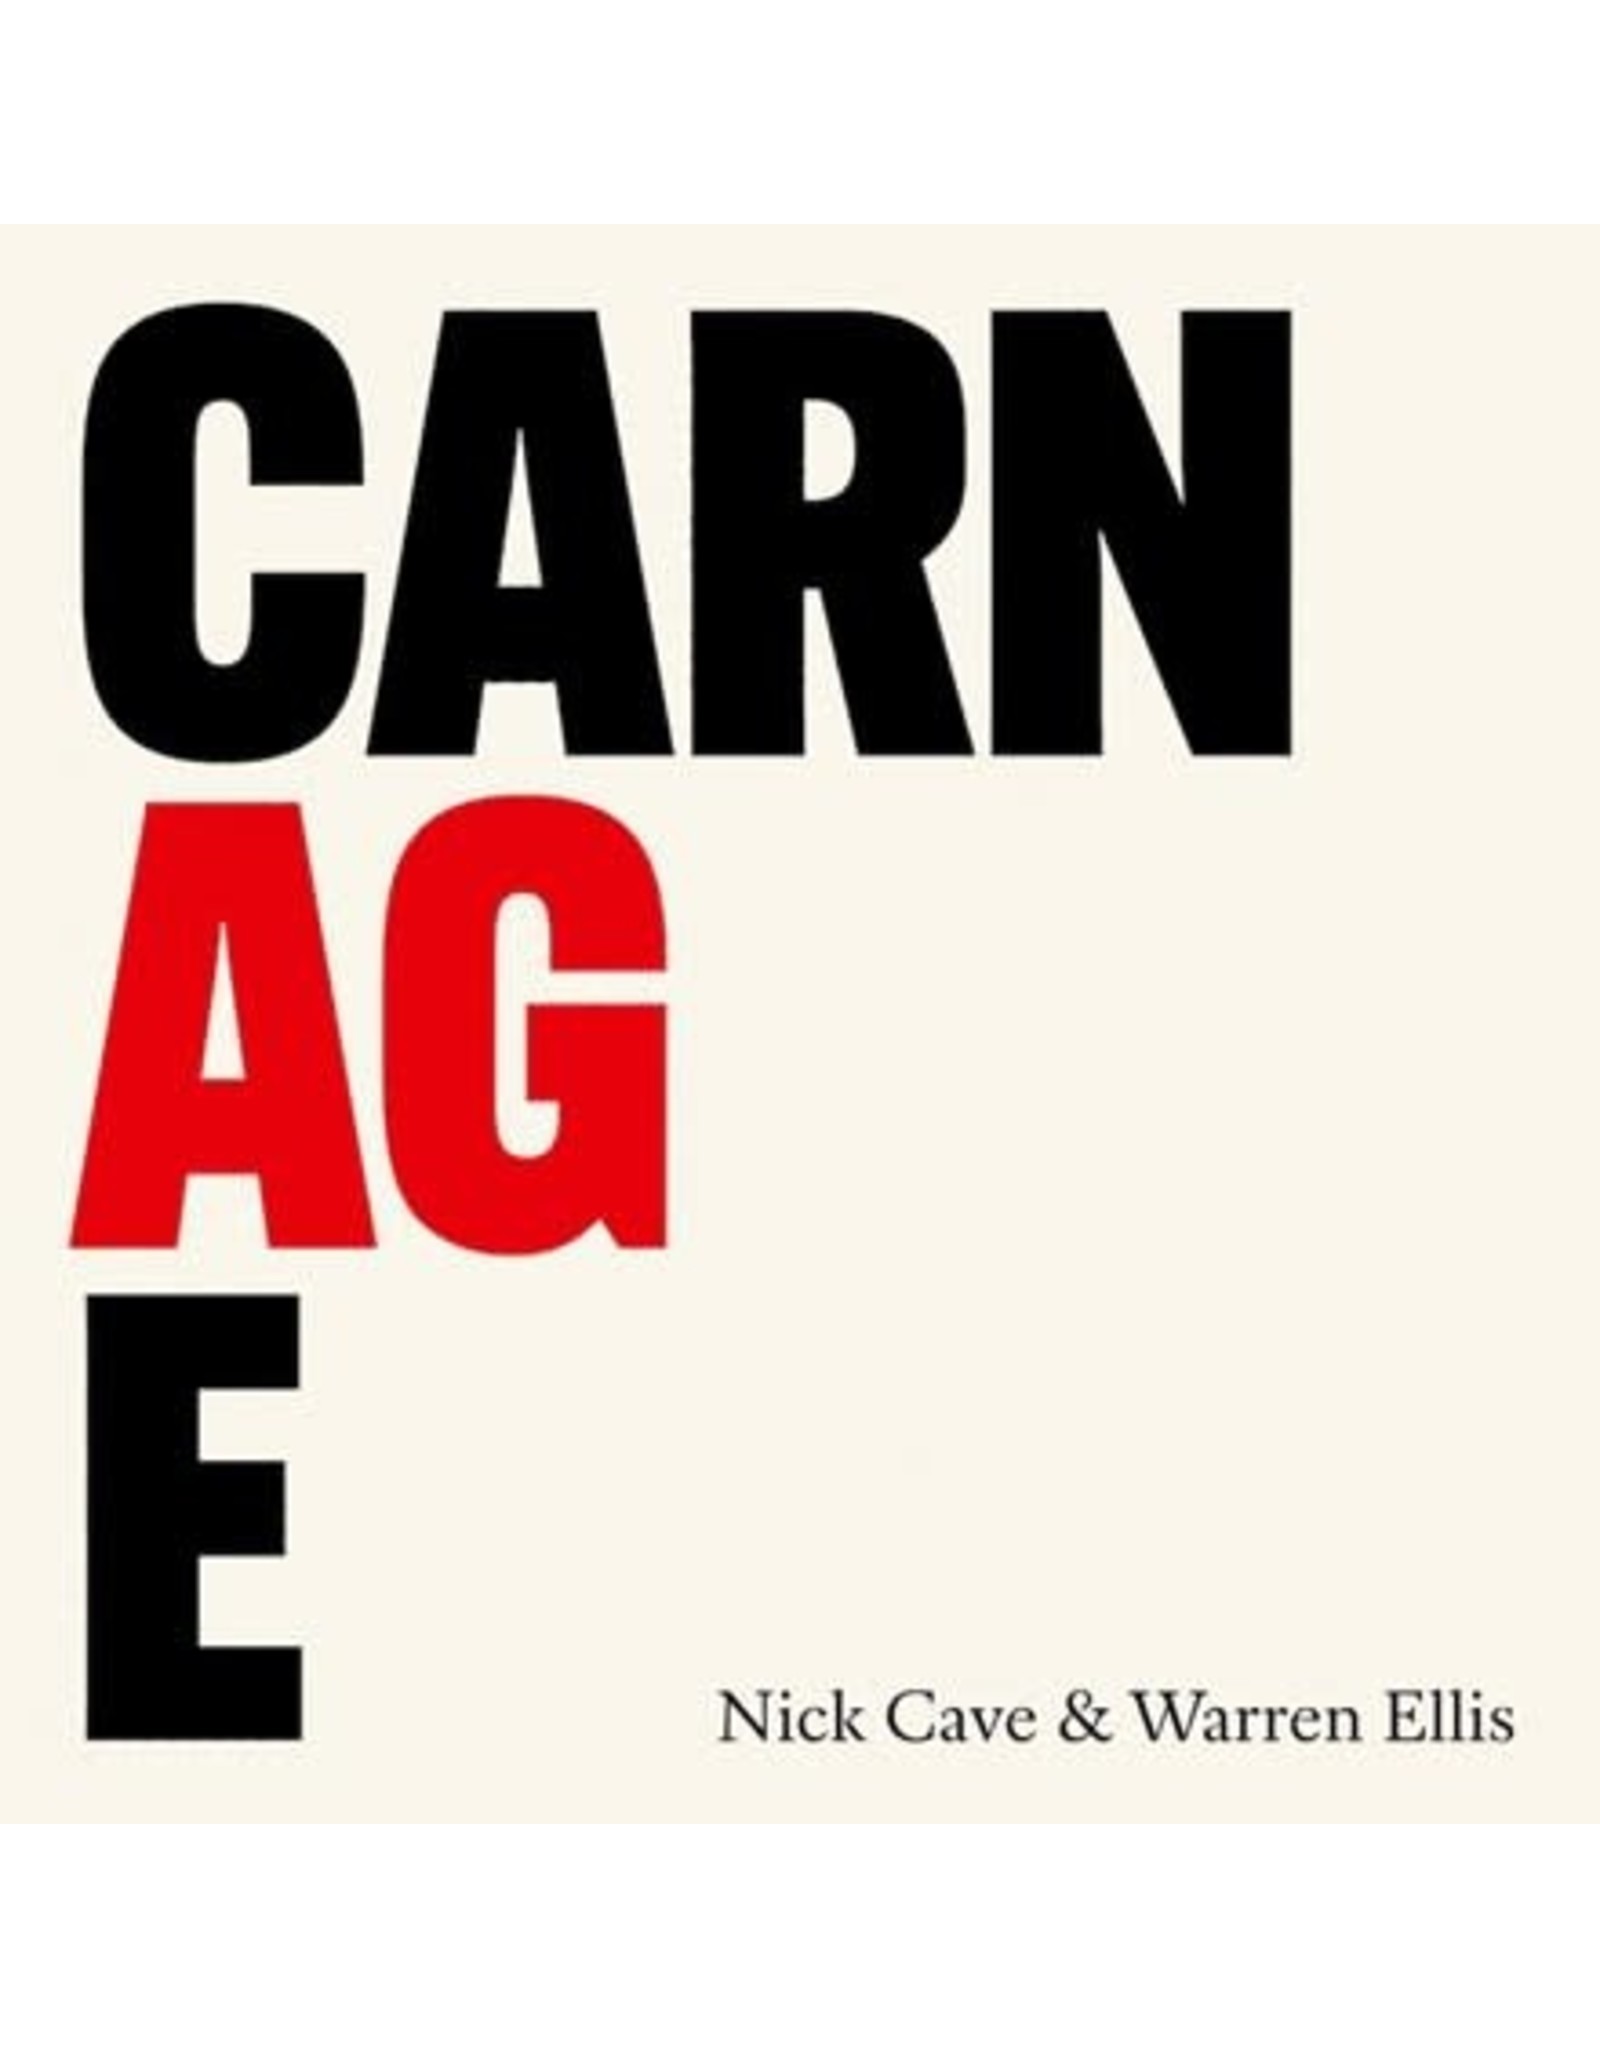 Goliath Cave, Nick & Warren Ellis: Carnage LP